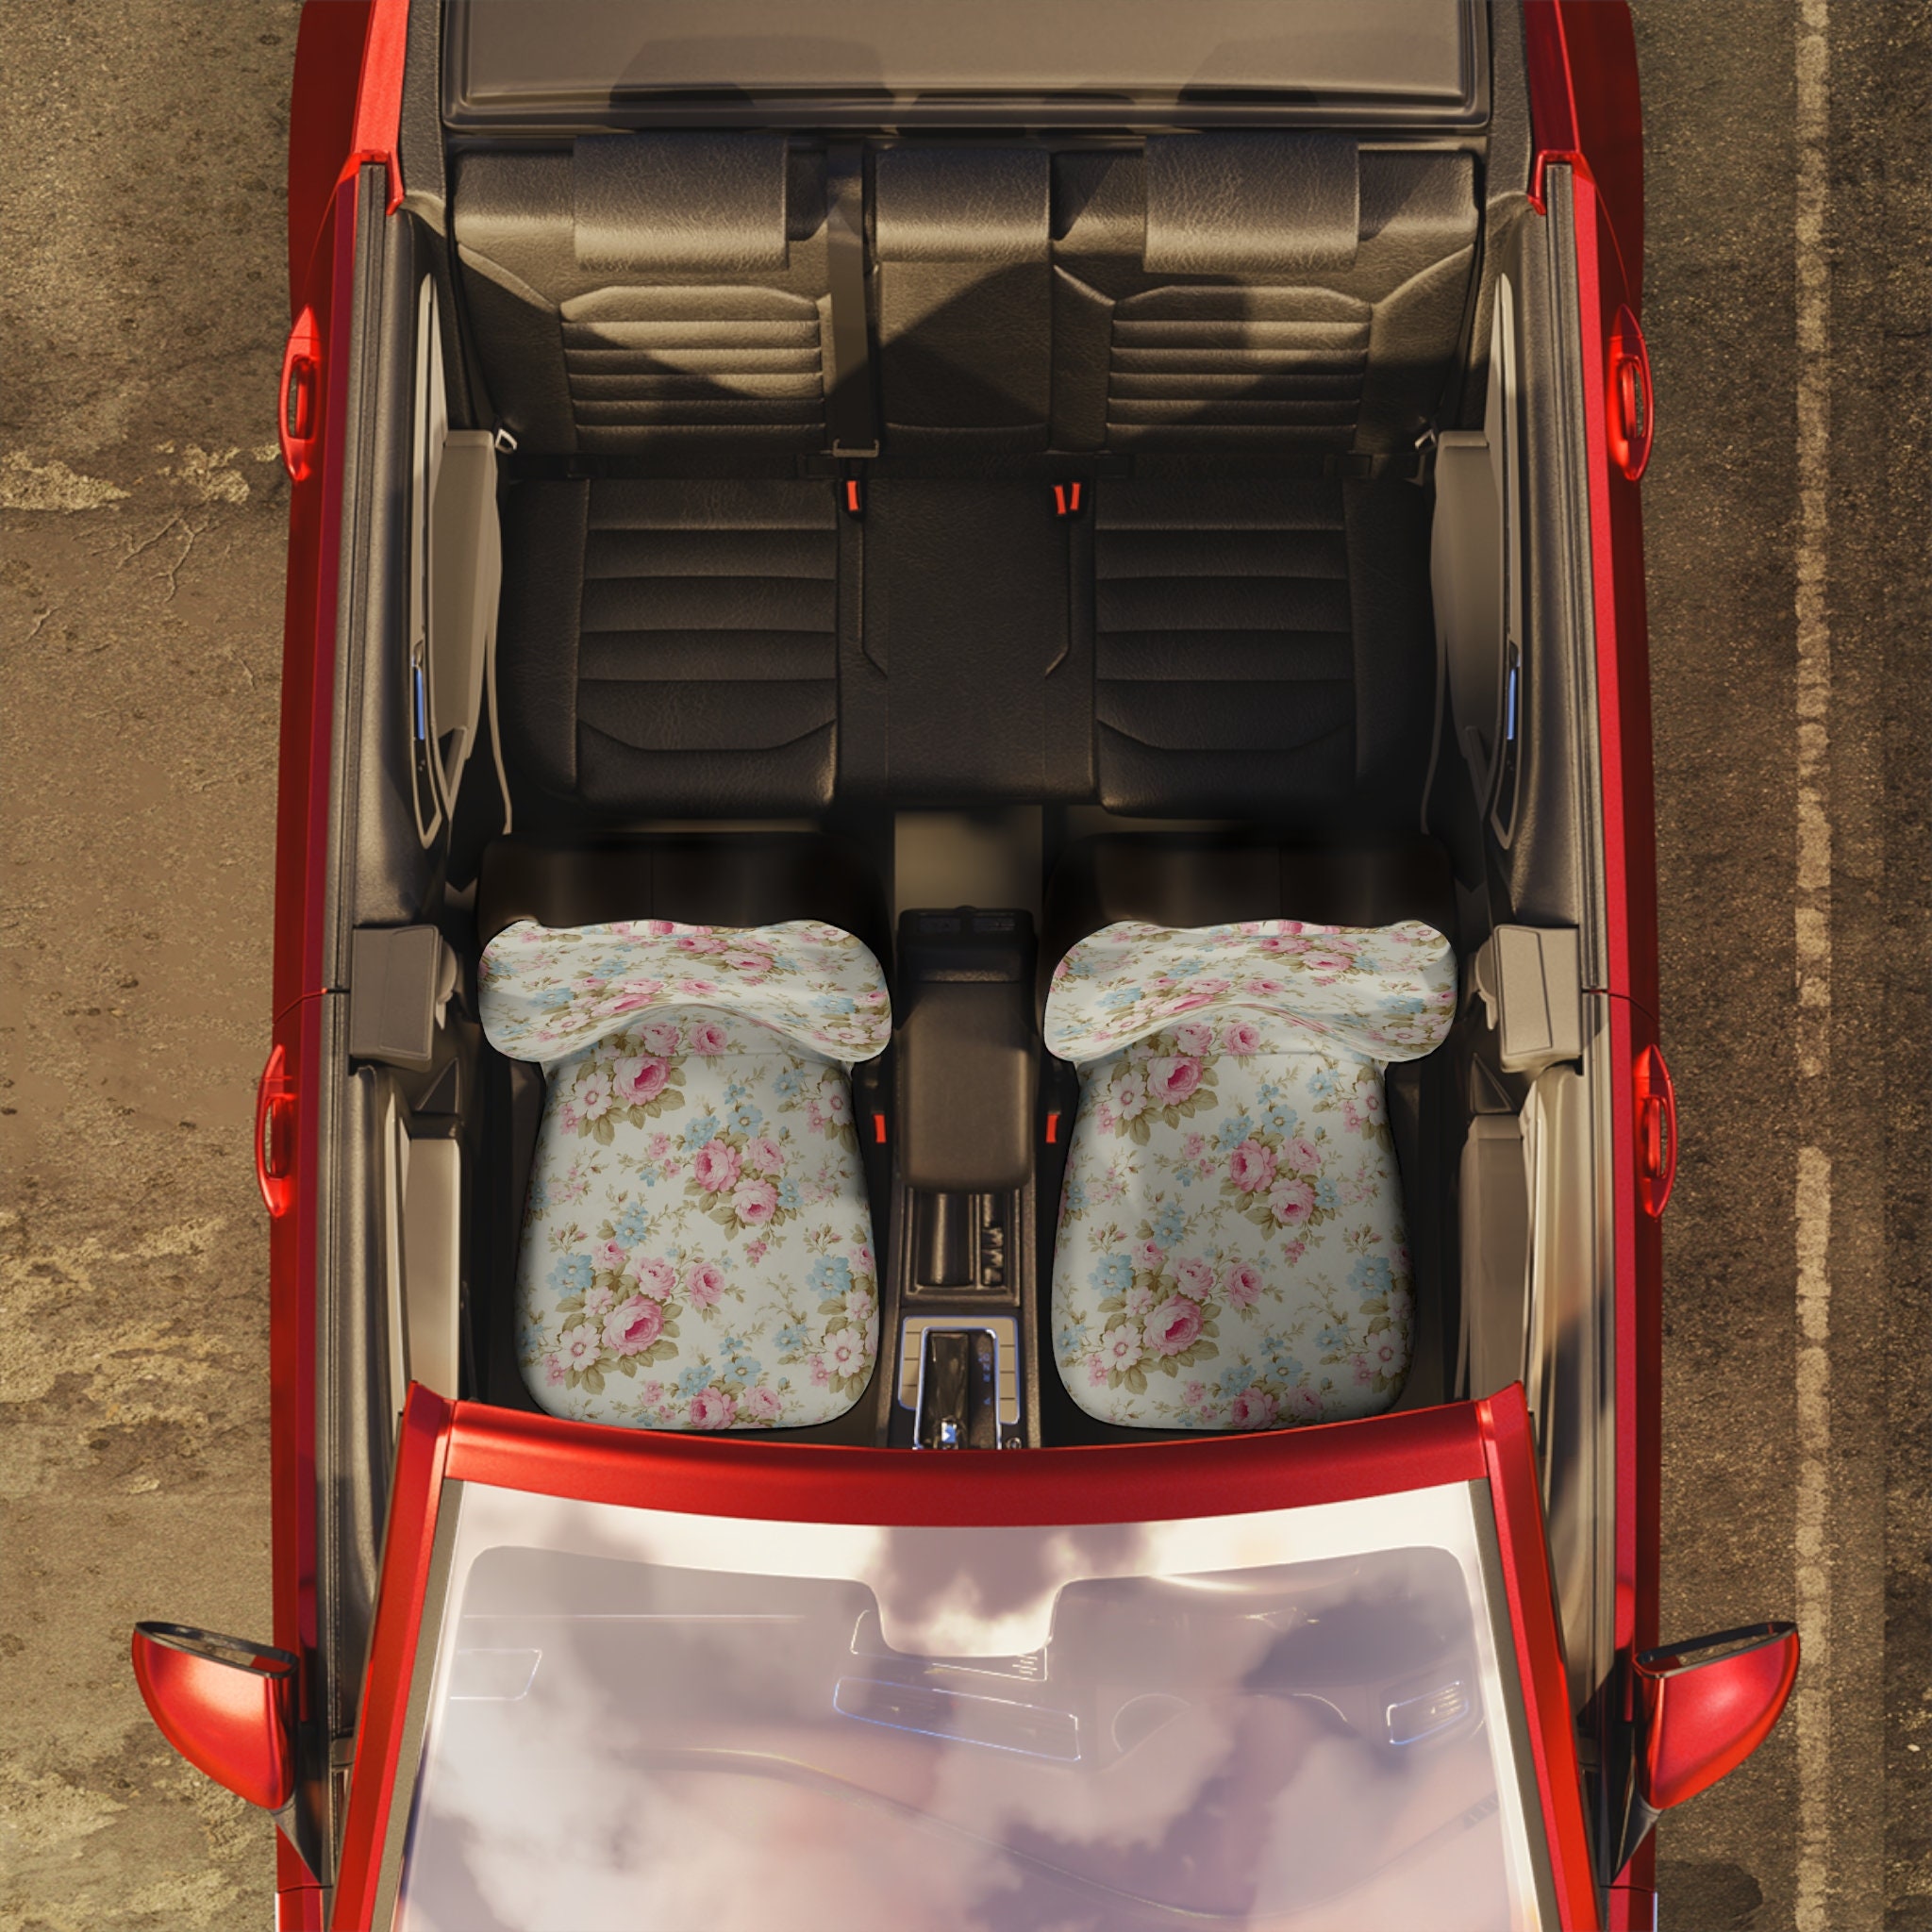 Cottagecore Flower Car Seat Cover